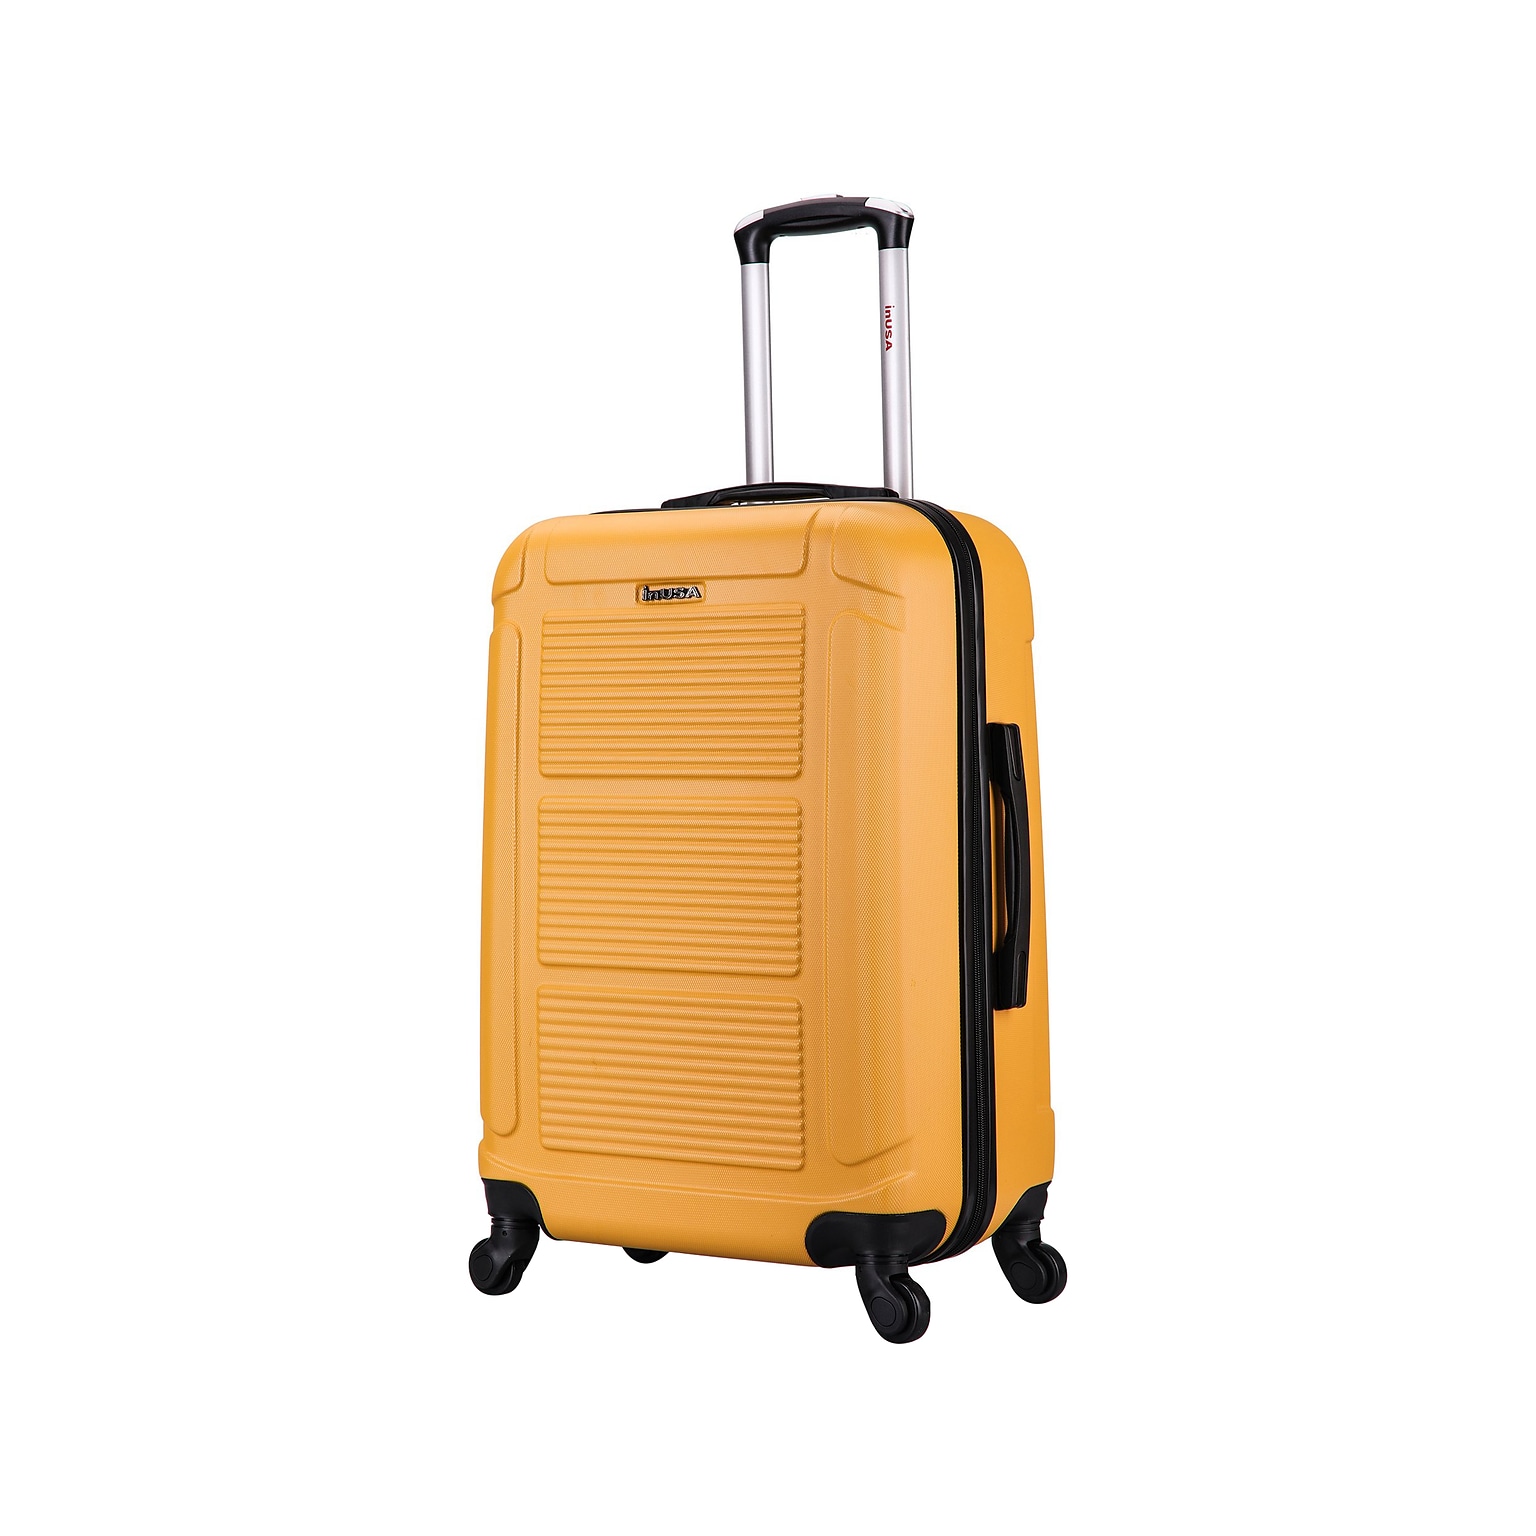 InUSA Pilot 24 Hardside Suitcase, 4-Wheeled Spinner, Mustard (IUPIL00M-MUS)